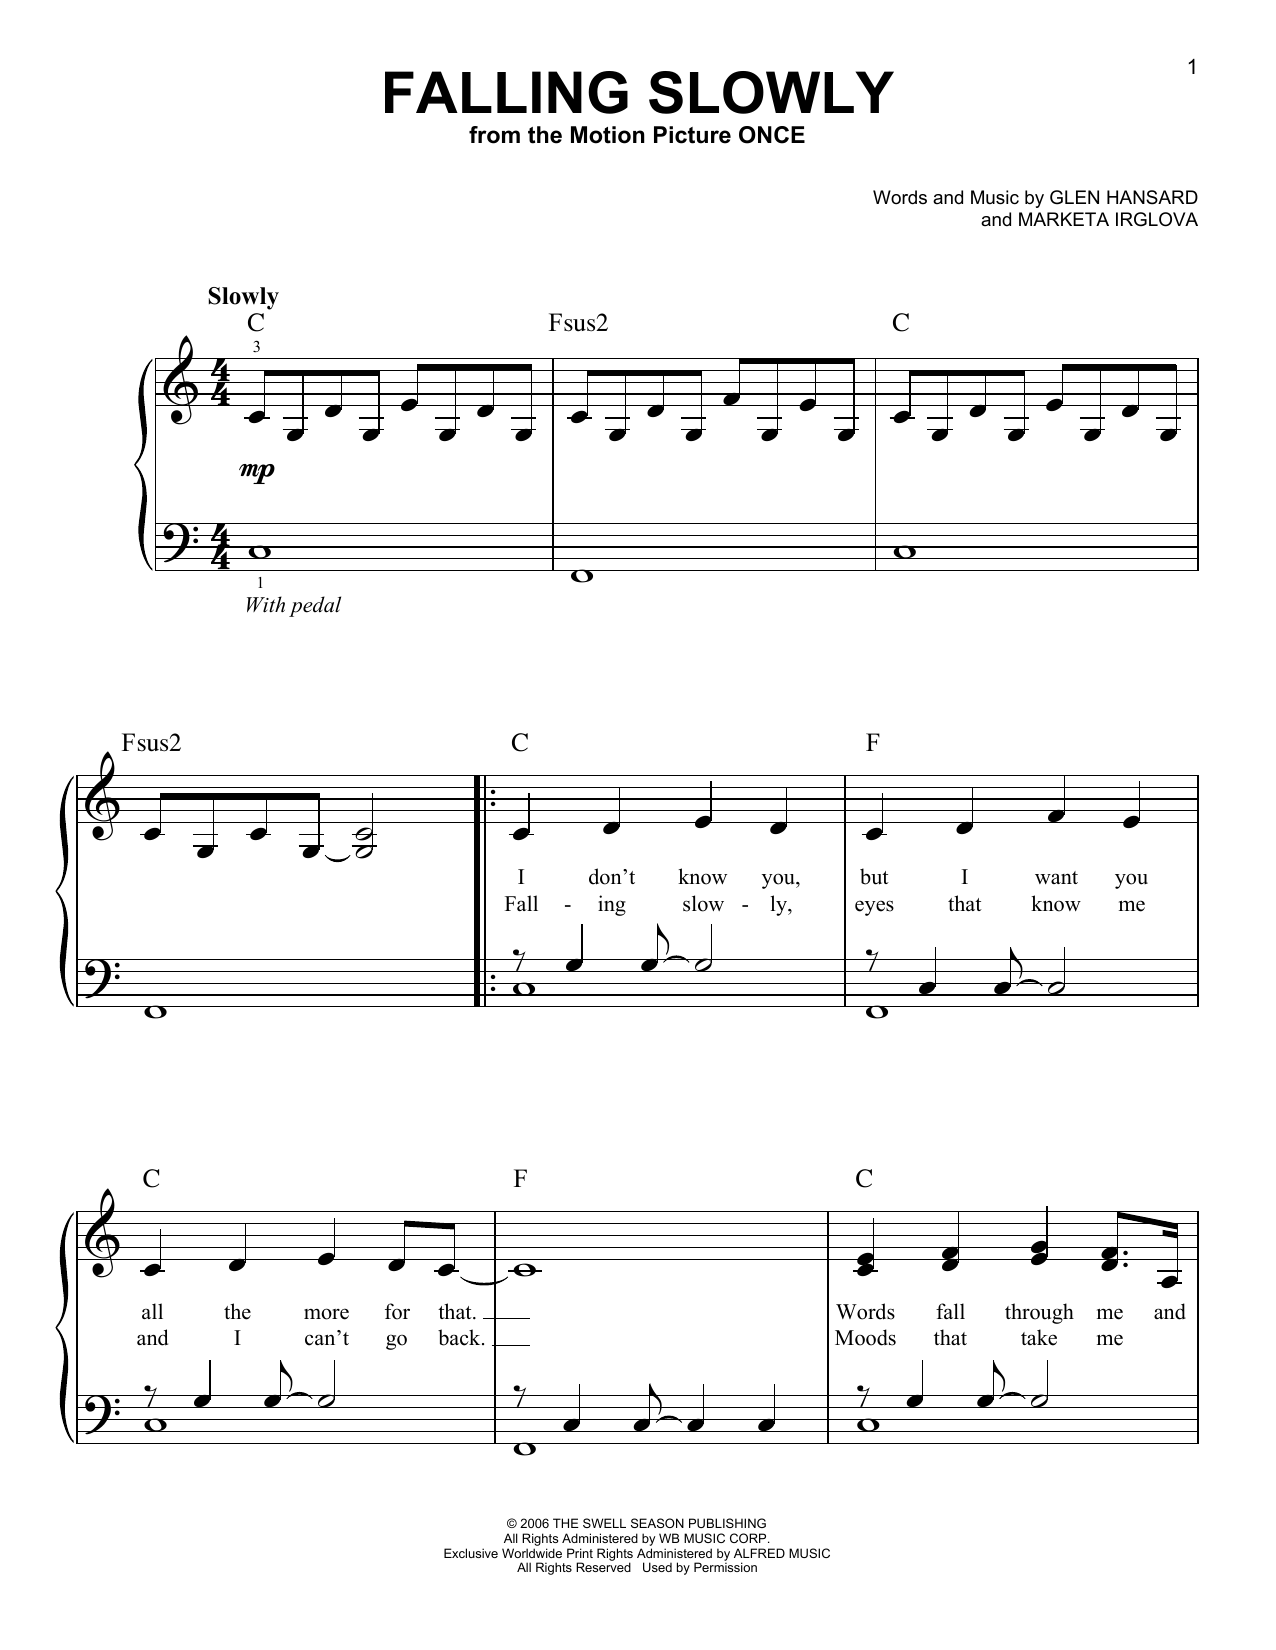 Glen Hansard & Marketa Irglova Falling Slowly (from Once) Sheet Music Notes & Chords for Guitar Tab - Download or Print PDF